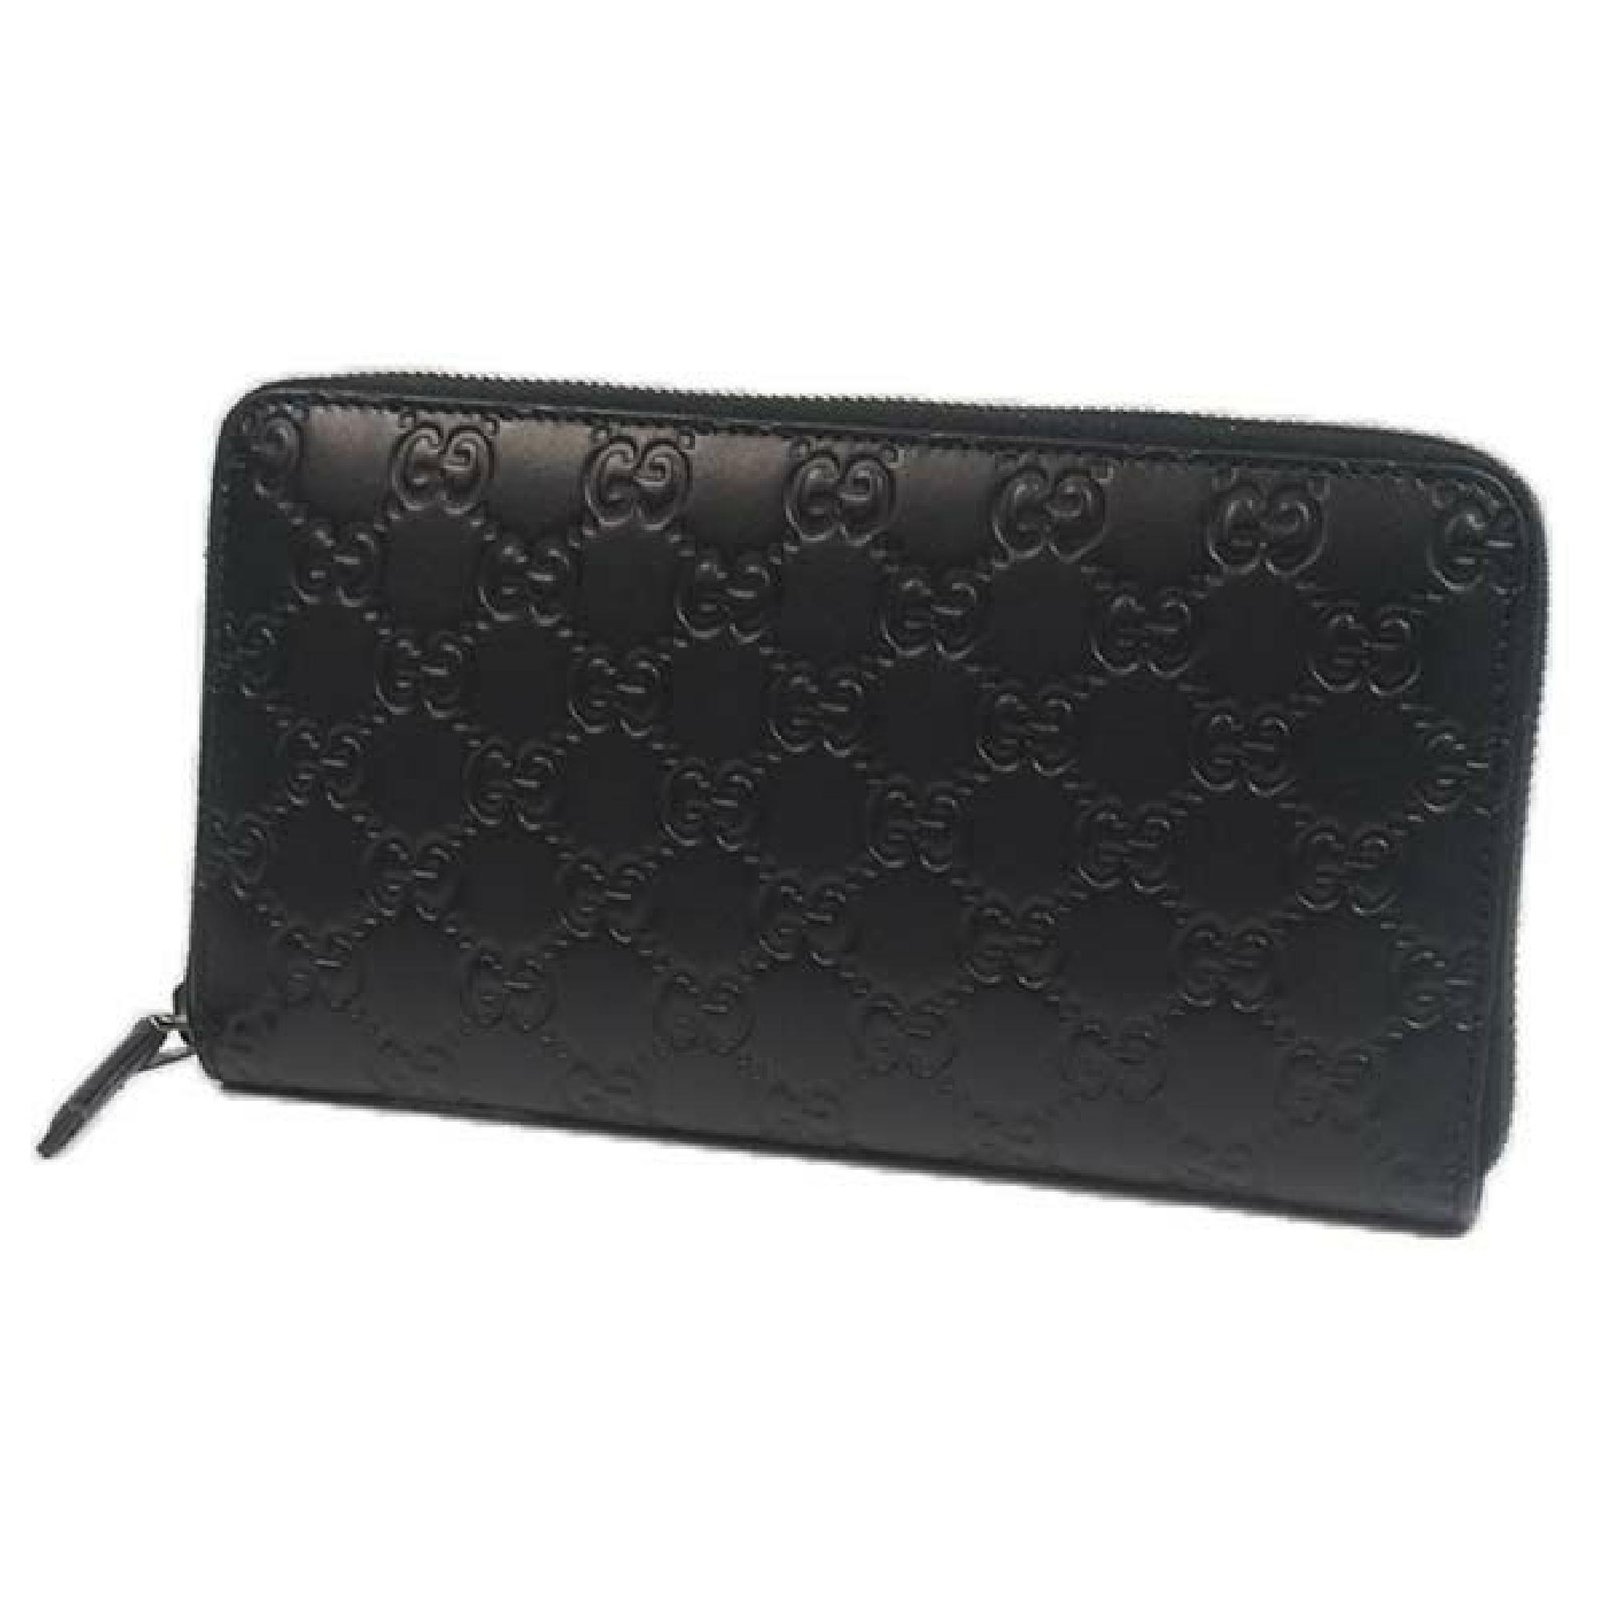 gg black purse